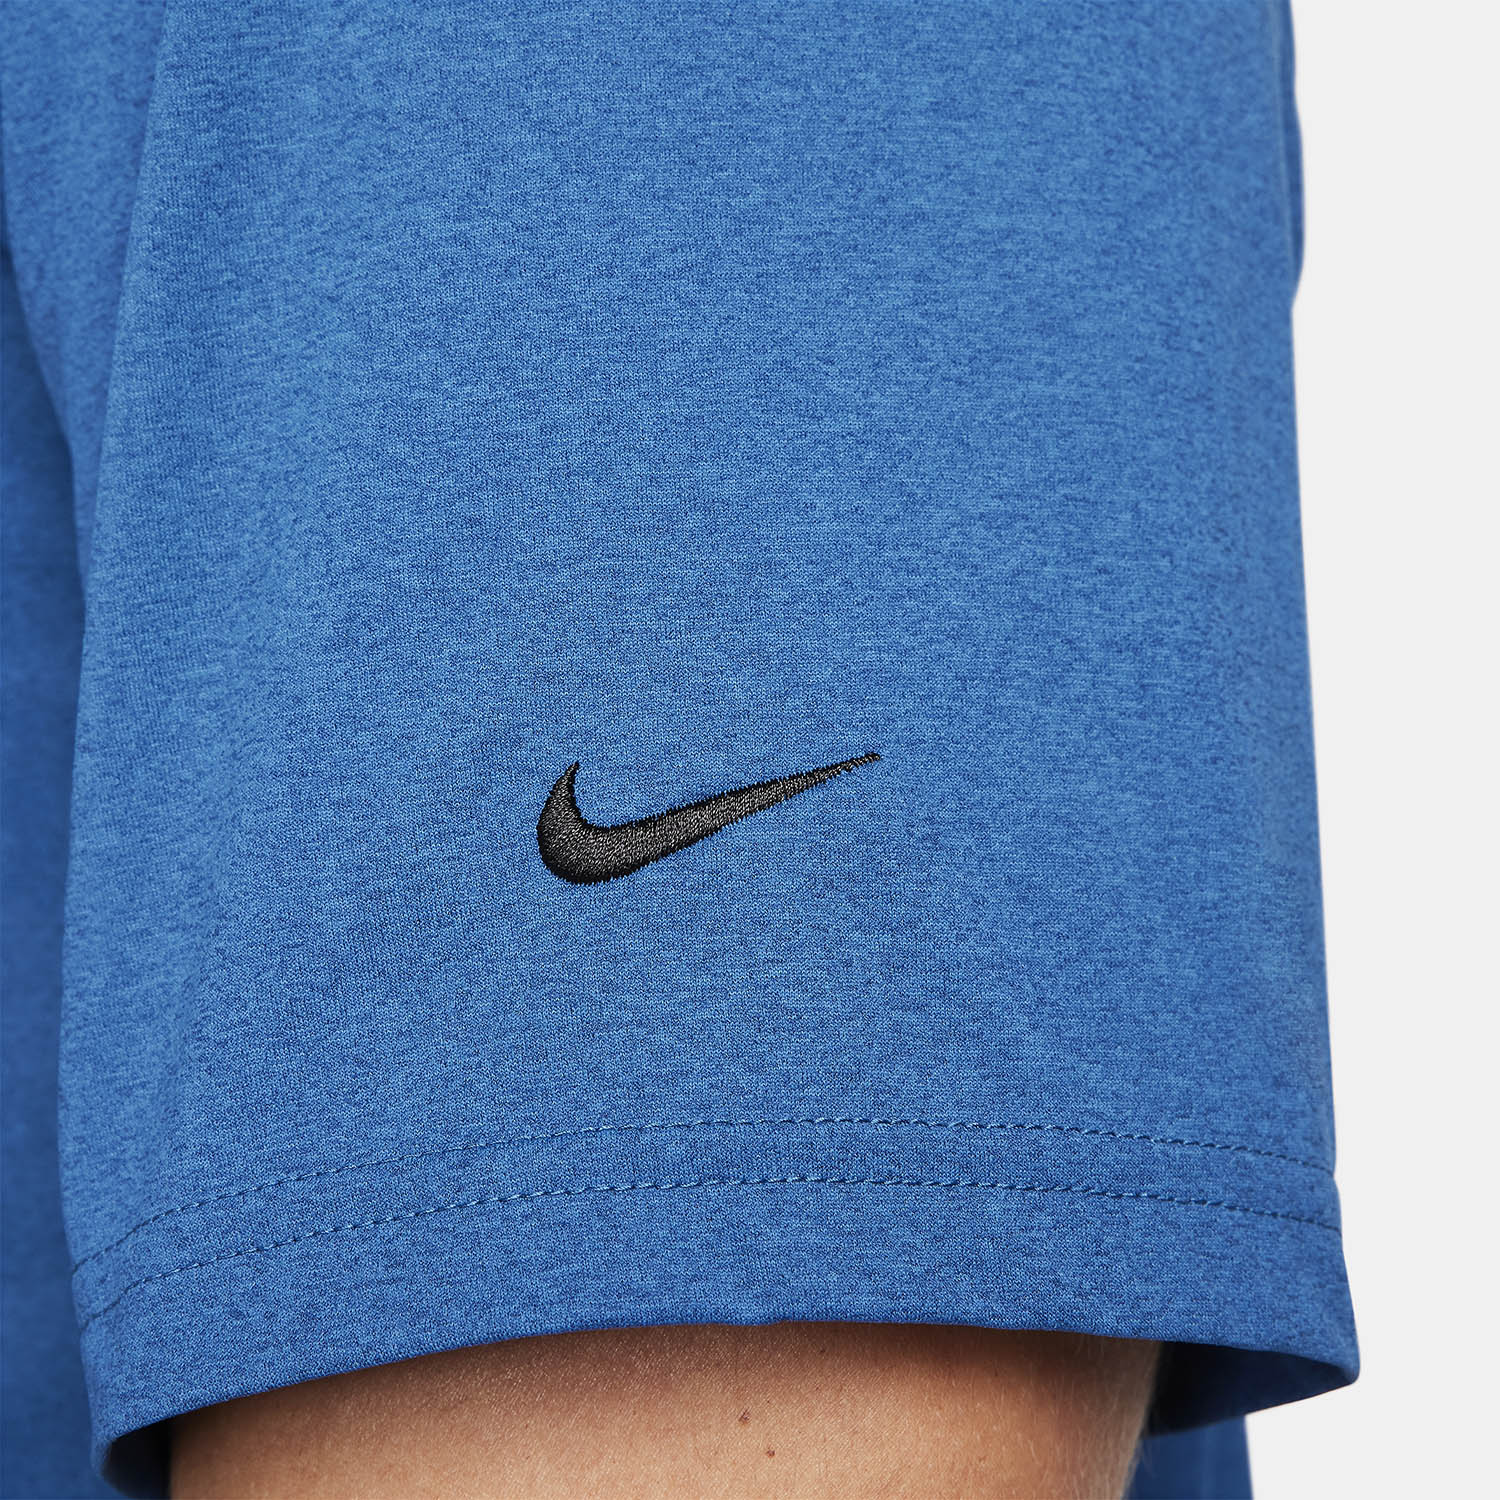 Nike Dri-FIT Hyverse Track Club T-Shirt - Court Blue/Summit White